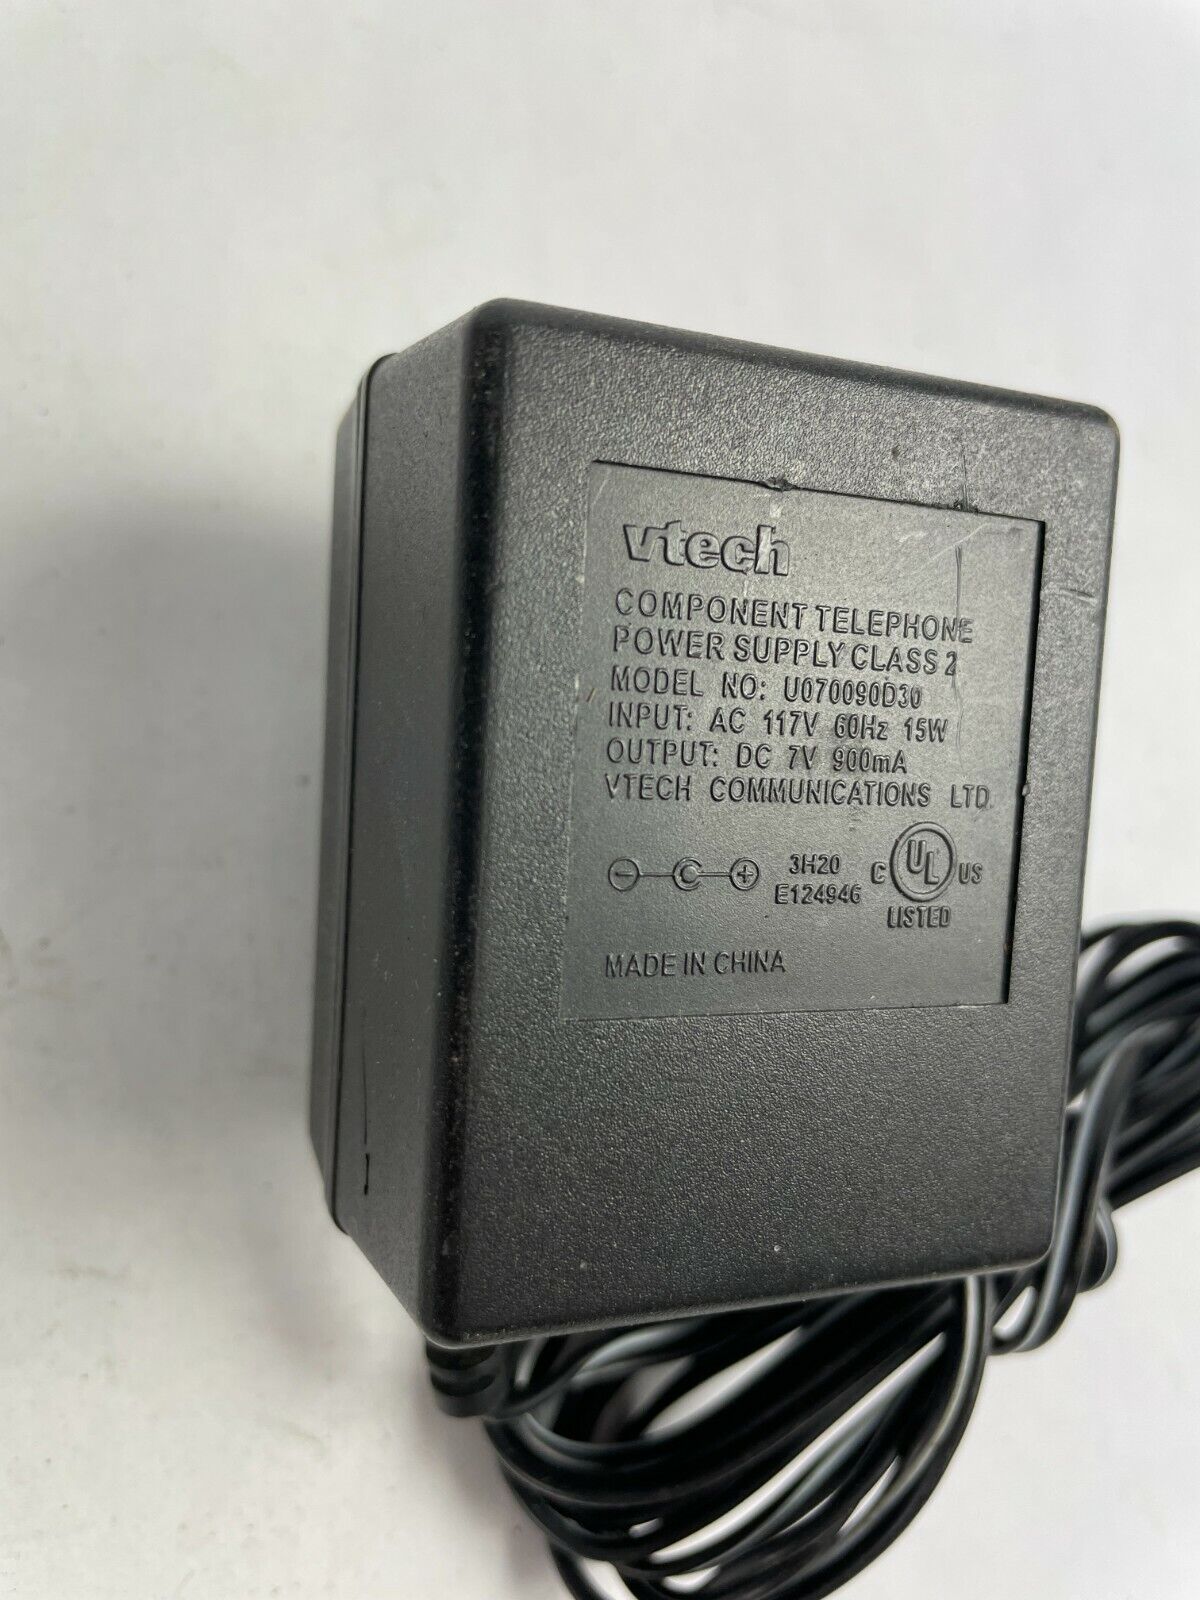 Genuine Vtech U070090D30 AC Adapter Output 7 V 900m A Power Supply Adapter Compatible Brand: Univ - Click Image to Close